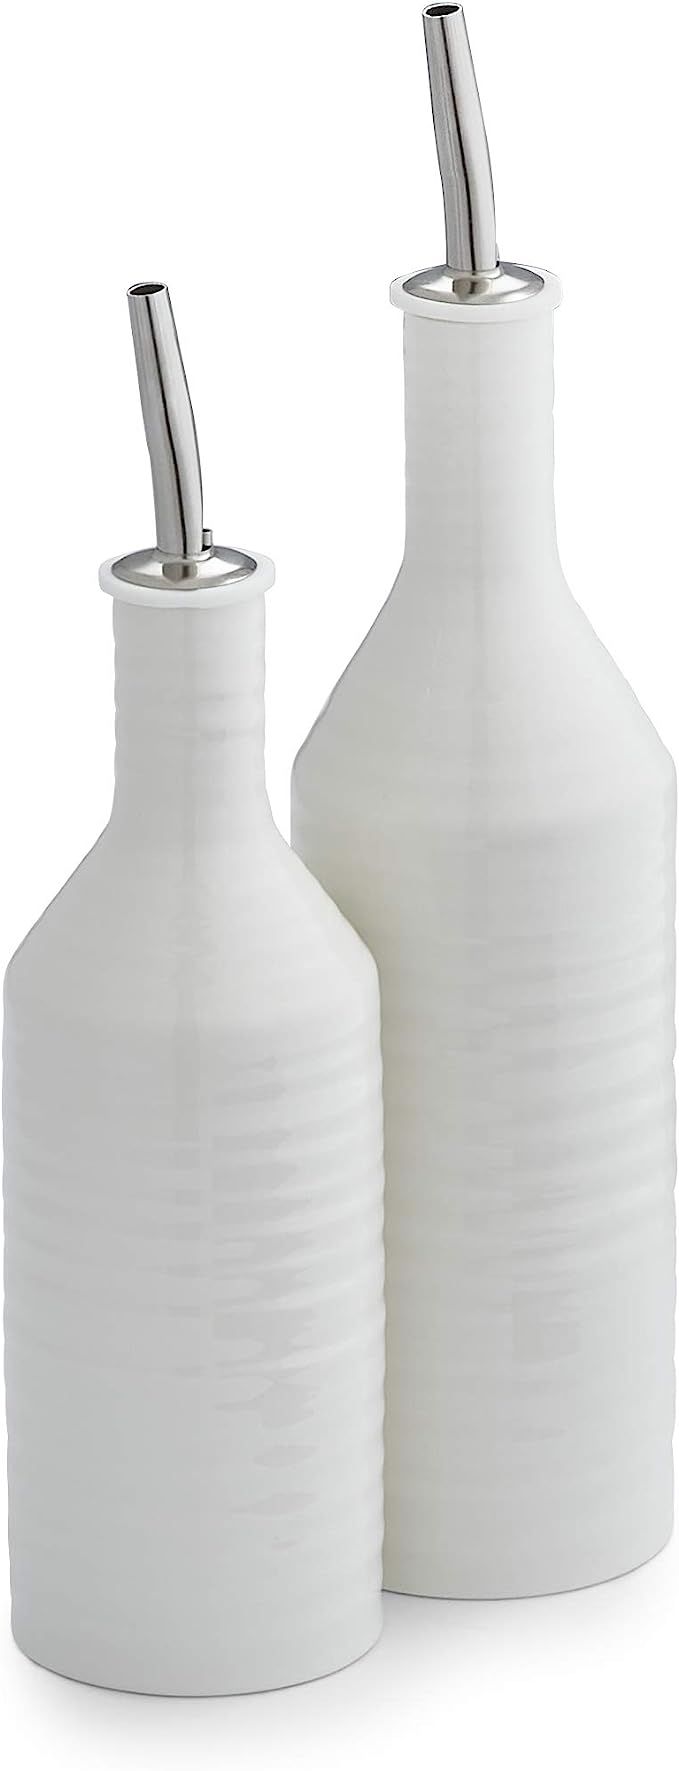 Portmeirion Sophie Conran Oil and Vinegar Drizzler Set, Porcelain, White, 7 x 7 x 26.5 cm : Home ... | Amazon (US)